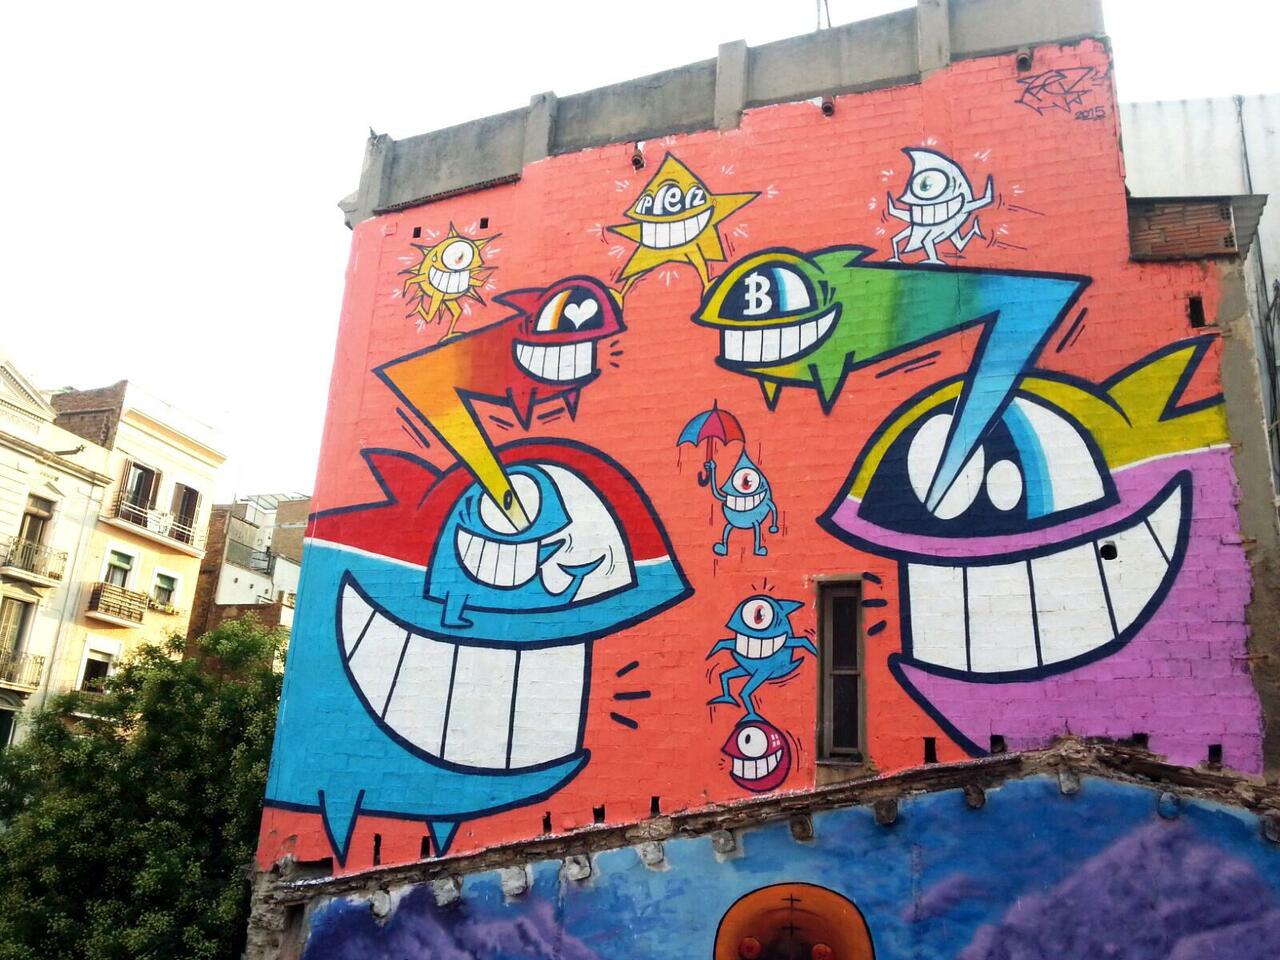 PEZ paints a new mural in Barcelona, Spain. #StreetArt #Graffiti #Mural http://t.co/oE1vaujirK